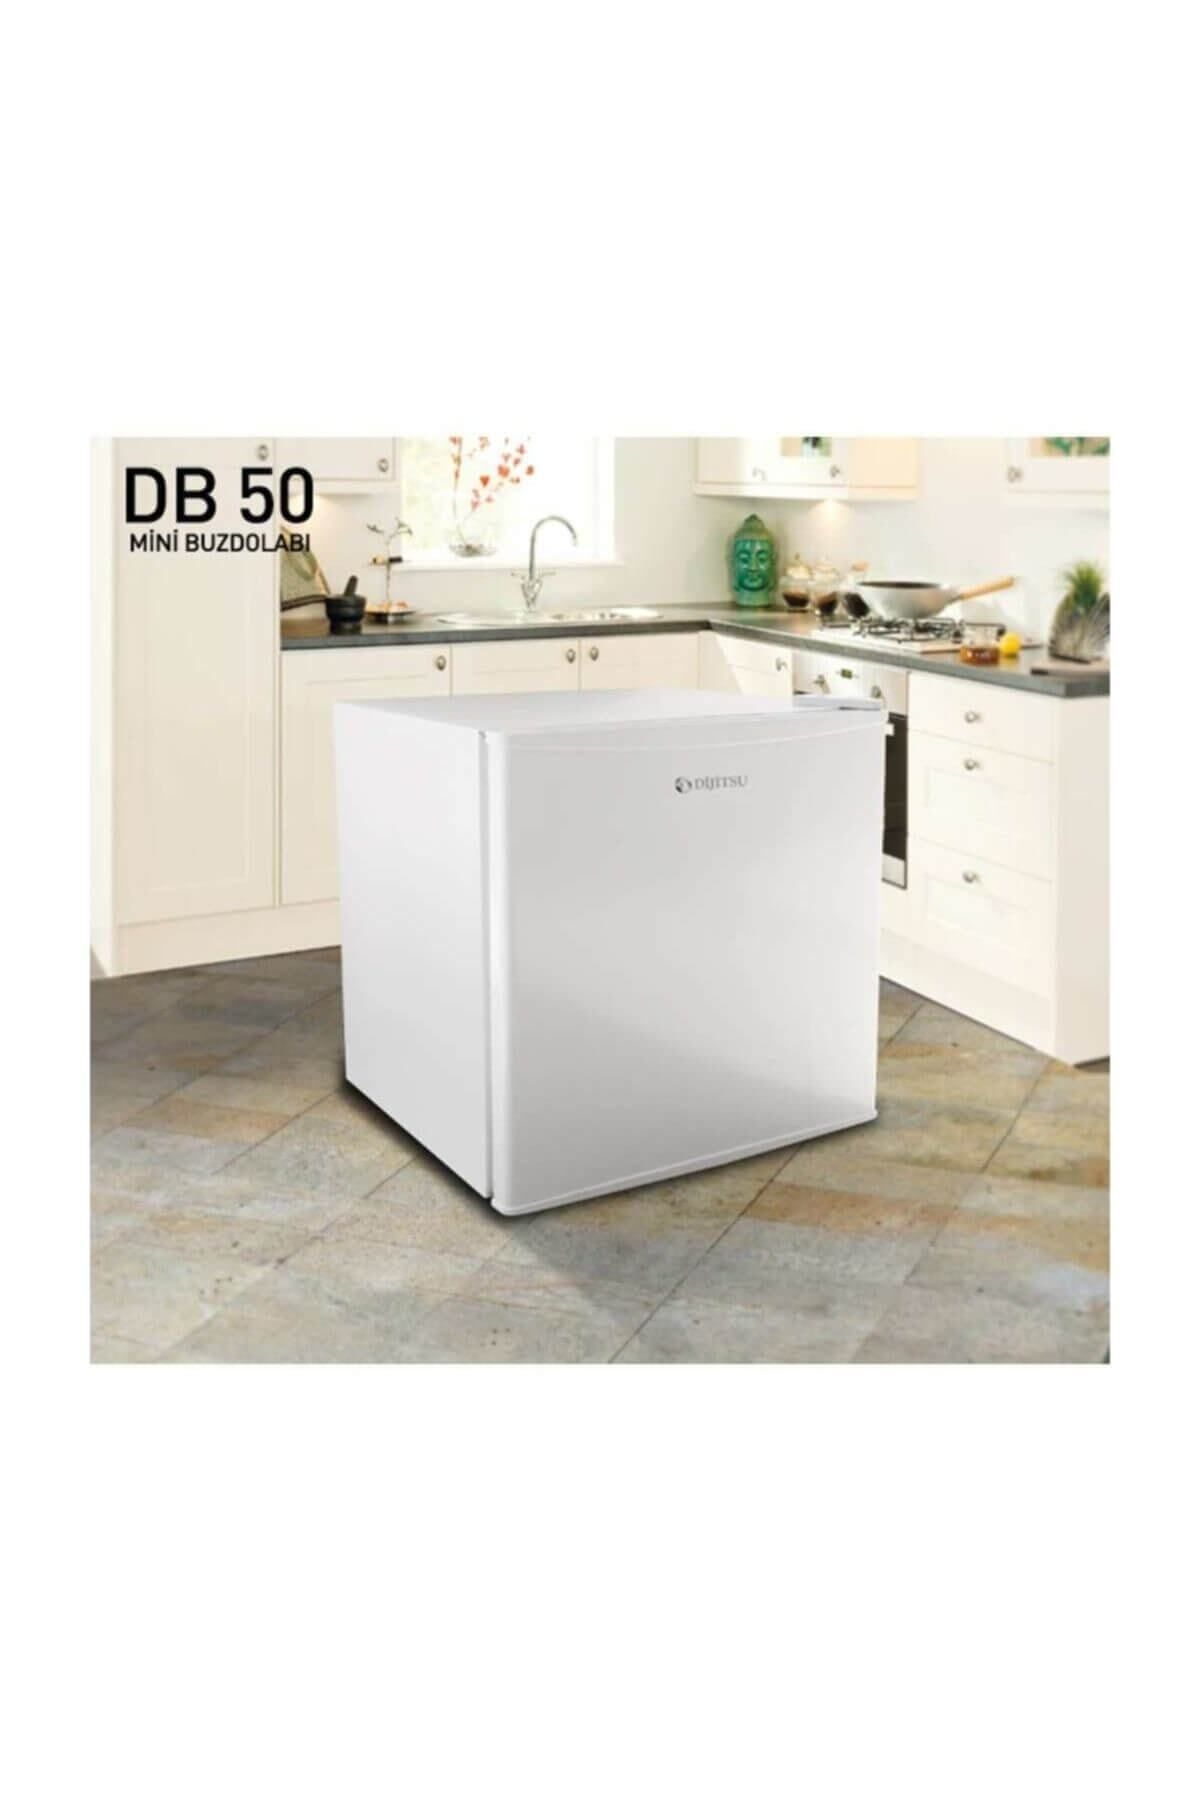 Dijitsu Db50 50 Lt Mini Buzdolabı